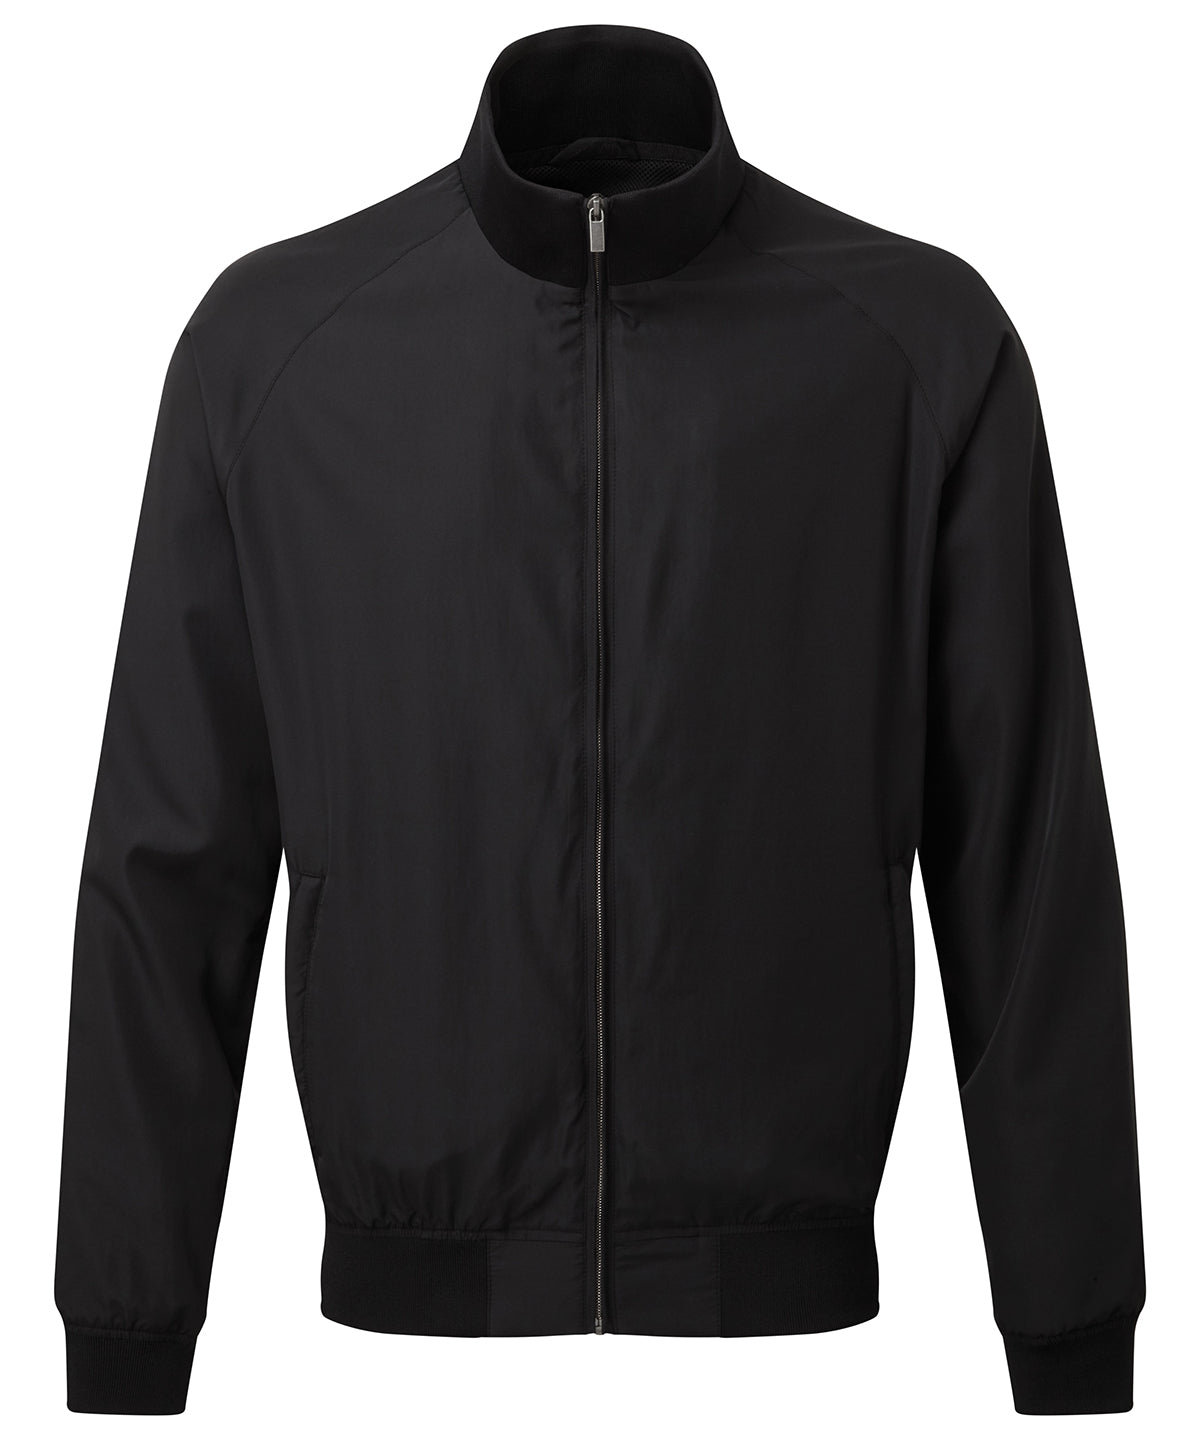 Personalised Jackets - Black Asquith & Fox Men's Harrington jacket